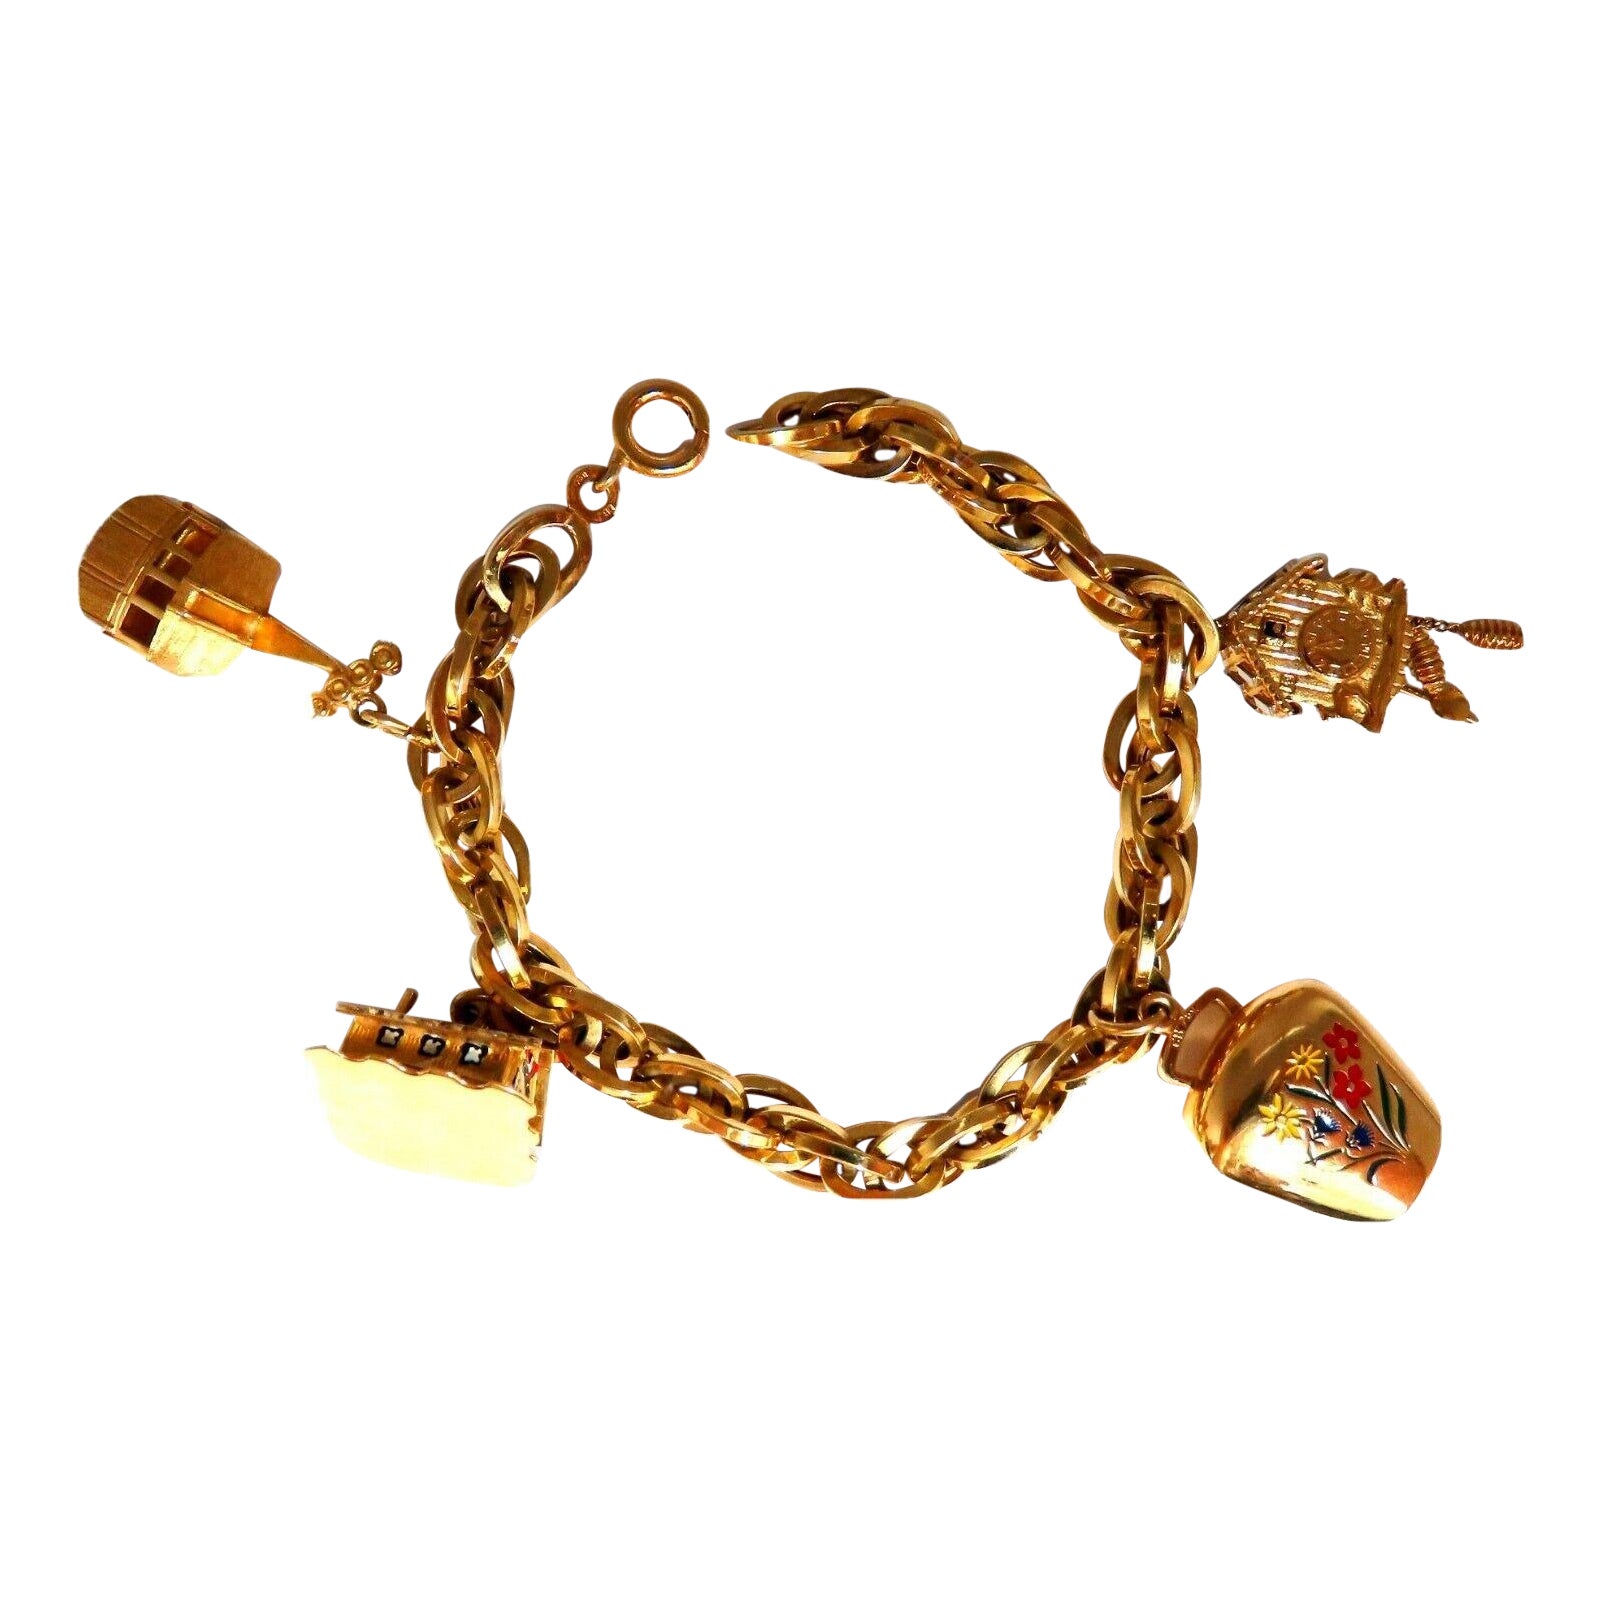 Switzerland Souvenir Charm Bracelet 3D 18kt